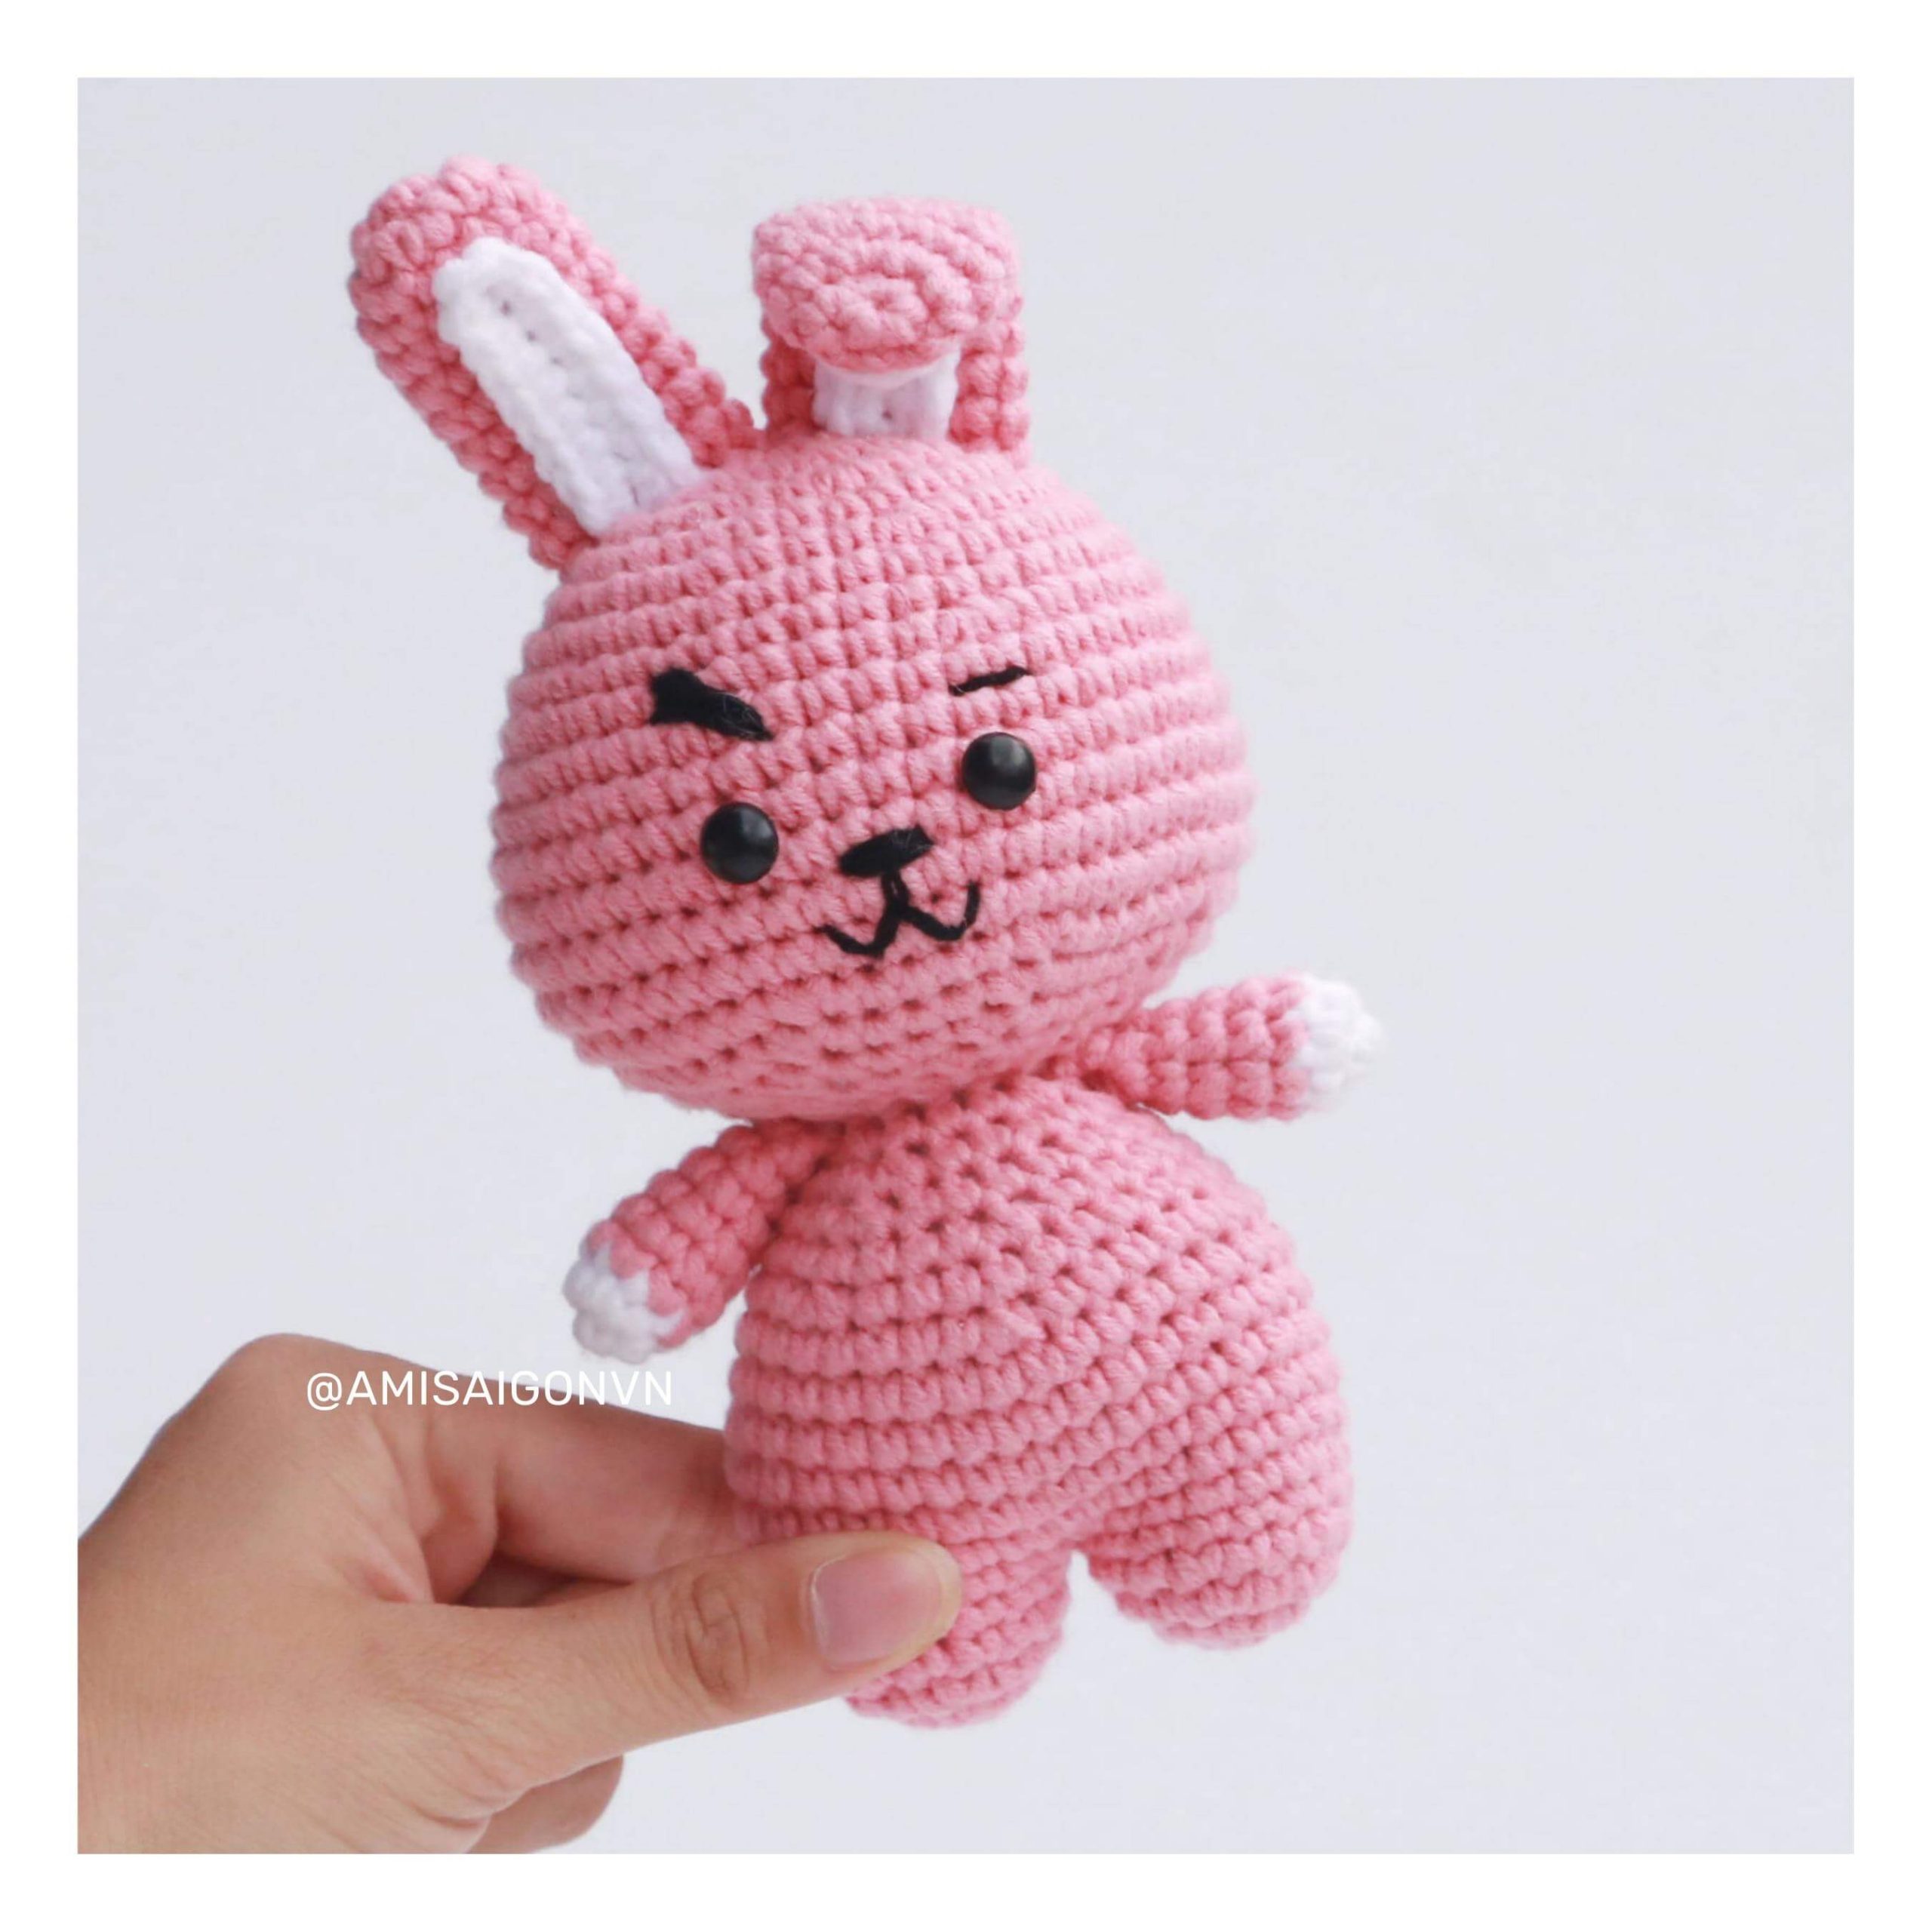 cooky-amigurumi-crochet-pattern-amisaigon (16)